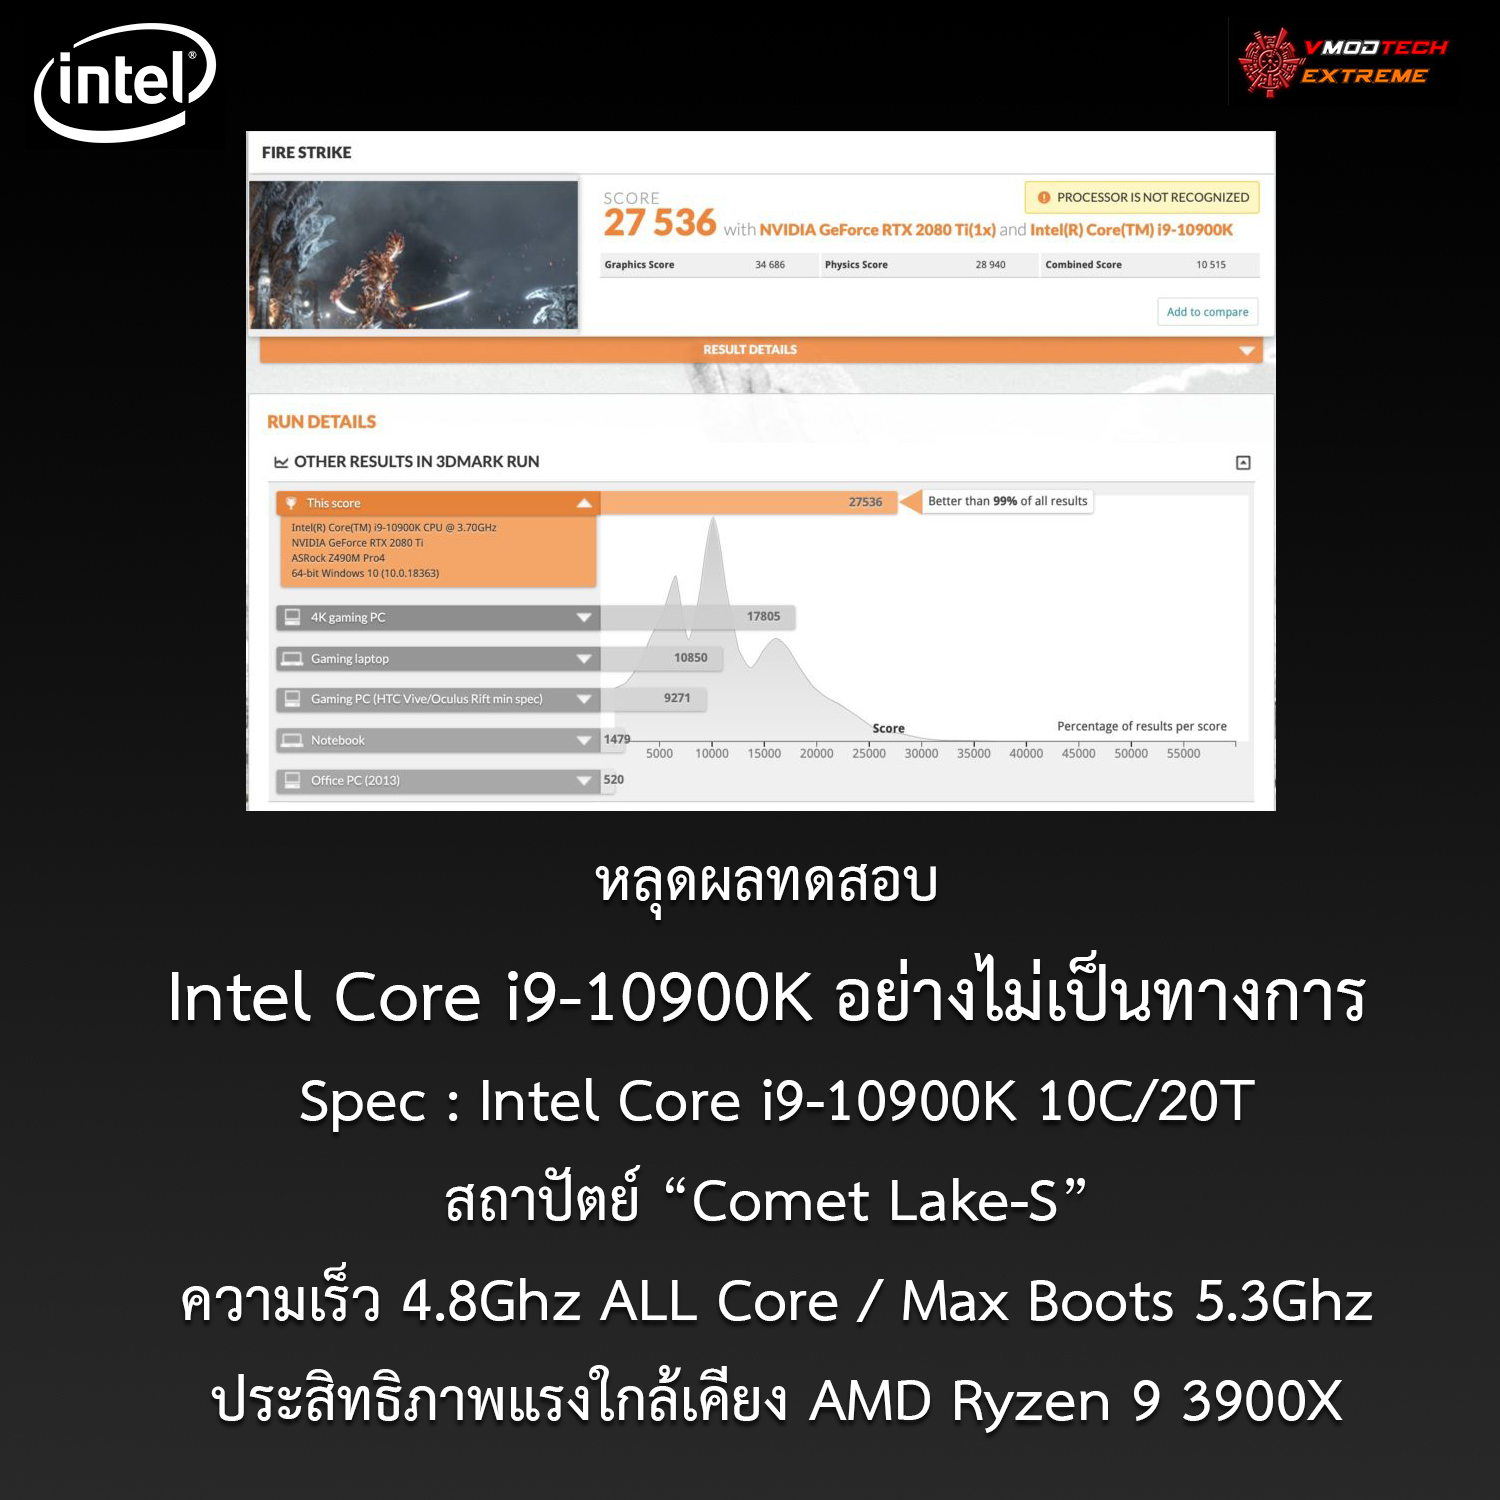 core i9 10900k comet lake s หลุดผลทดสอบ Intel Core i9 10900K 10C/20T อย่างไม่เป็นทางการ ประสิทธิภาพแรงใกล้เคียง AMD Ryzen 9 3900X กันเลยทีเดียว 